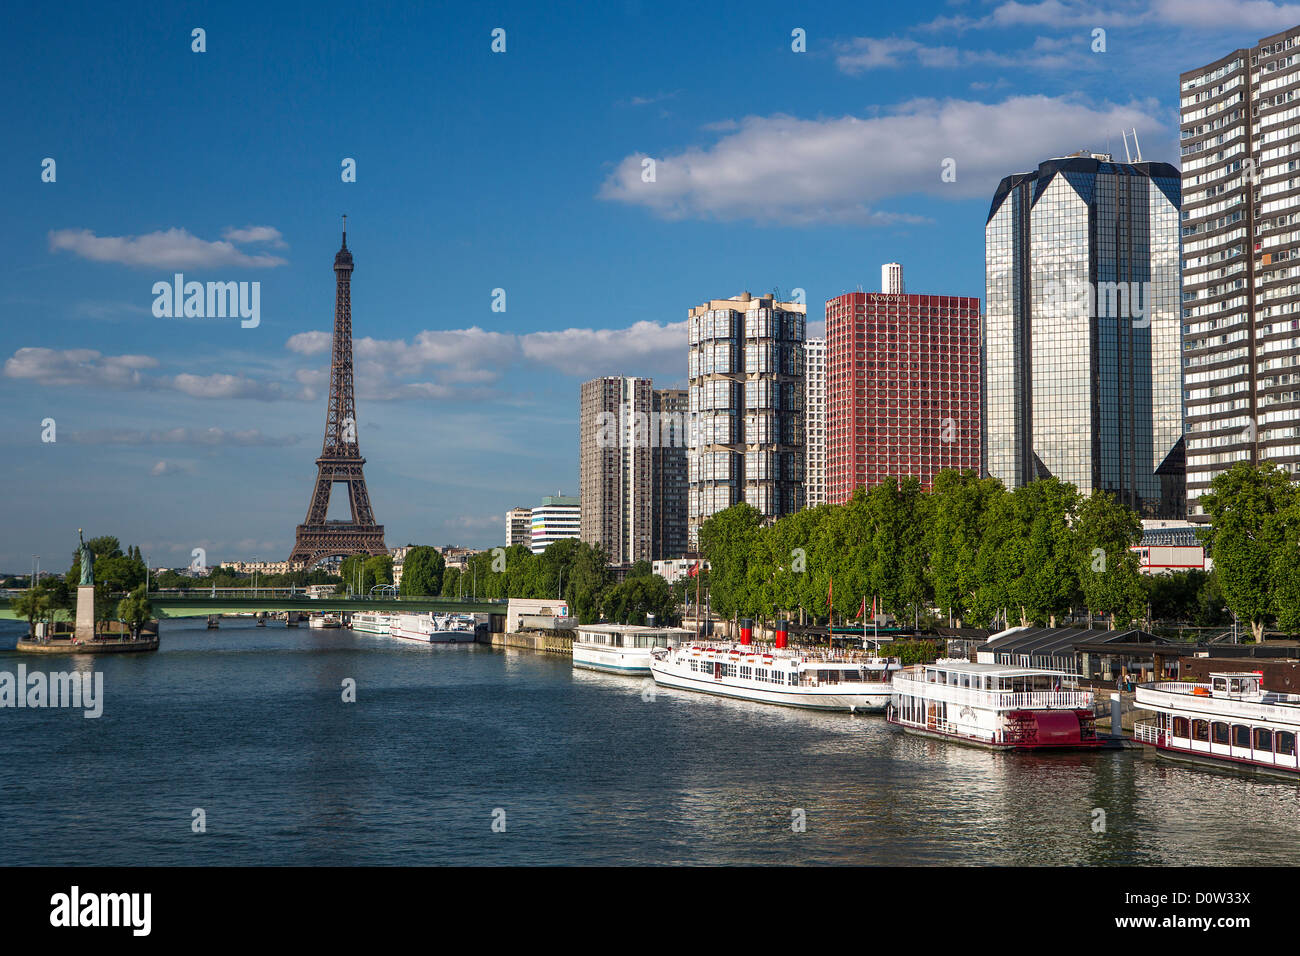 France, Europe, travel, Paris, City, Eiffel Tower, Statue, Seine, River, architecture, art, monumental, buildings, symbol, landm Stock Photo